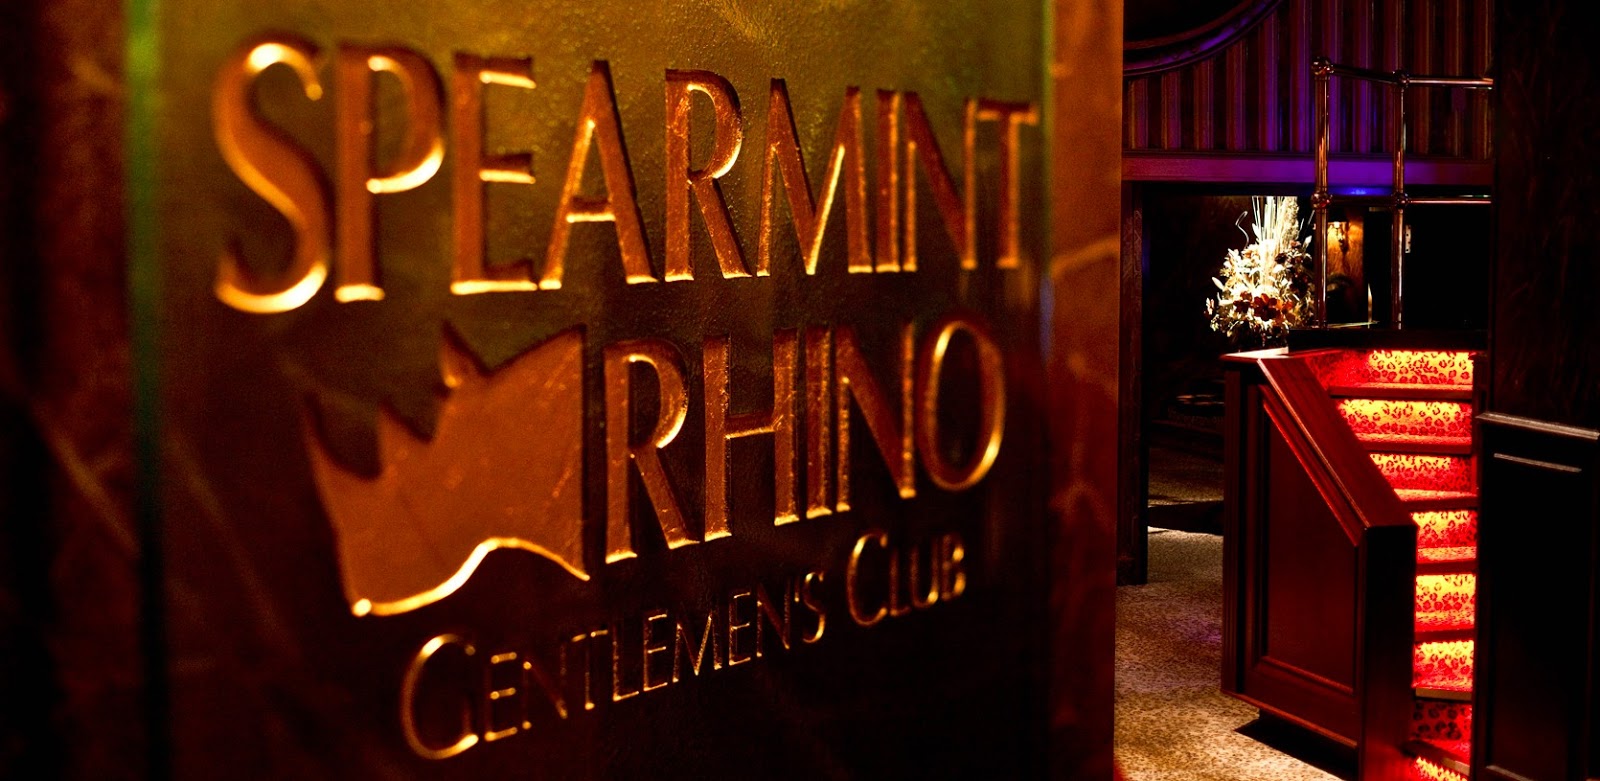 Spearmint Rhino Gentlemen's Club Van Nuys